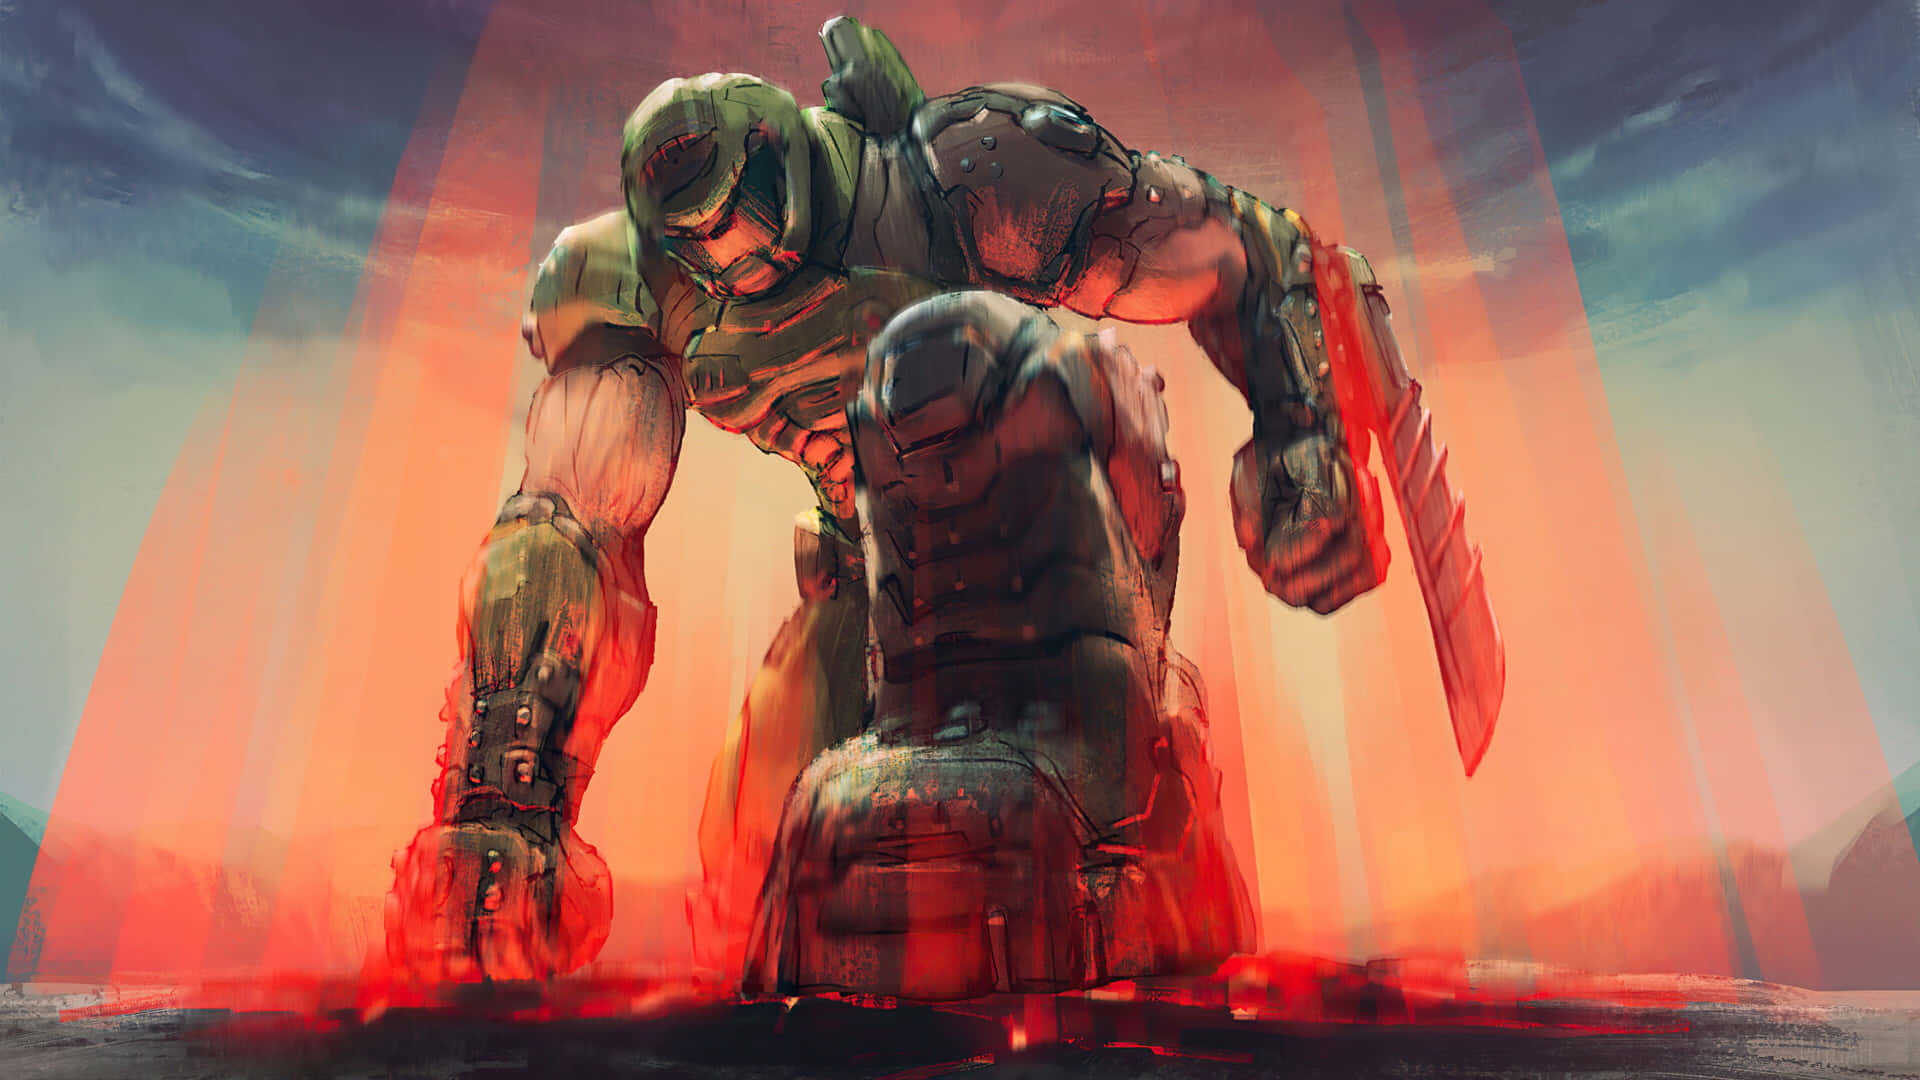 Ferocious Doom Slayer takes on the Hellish Hordes in Doom Eternal